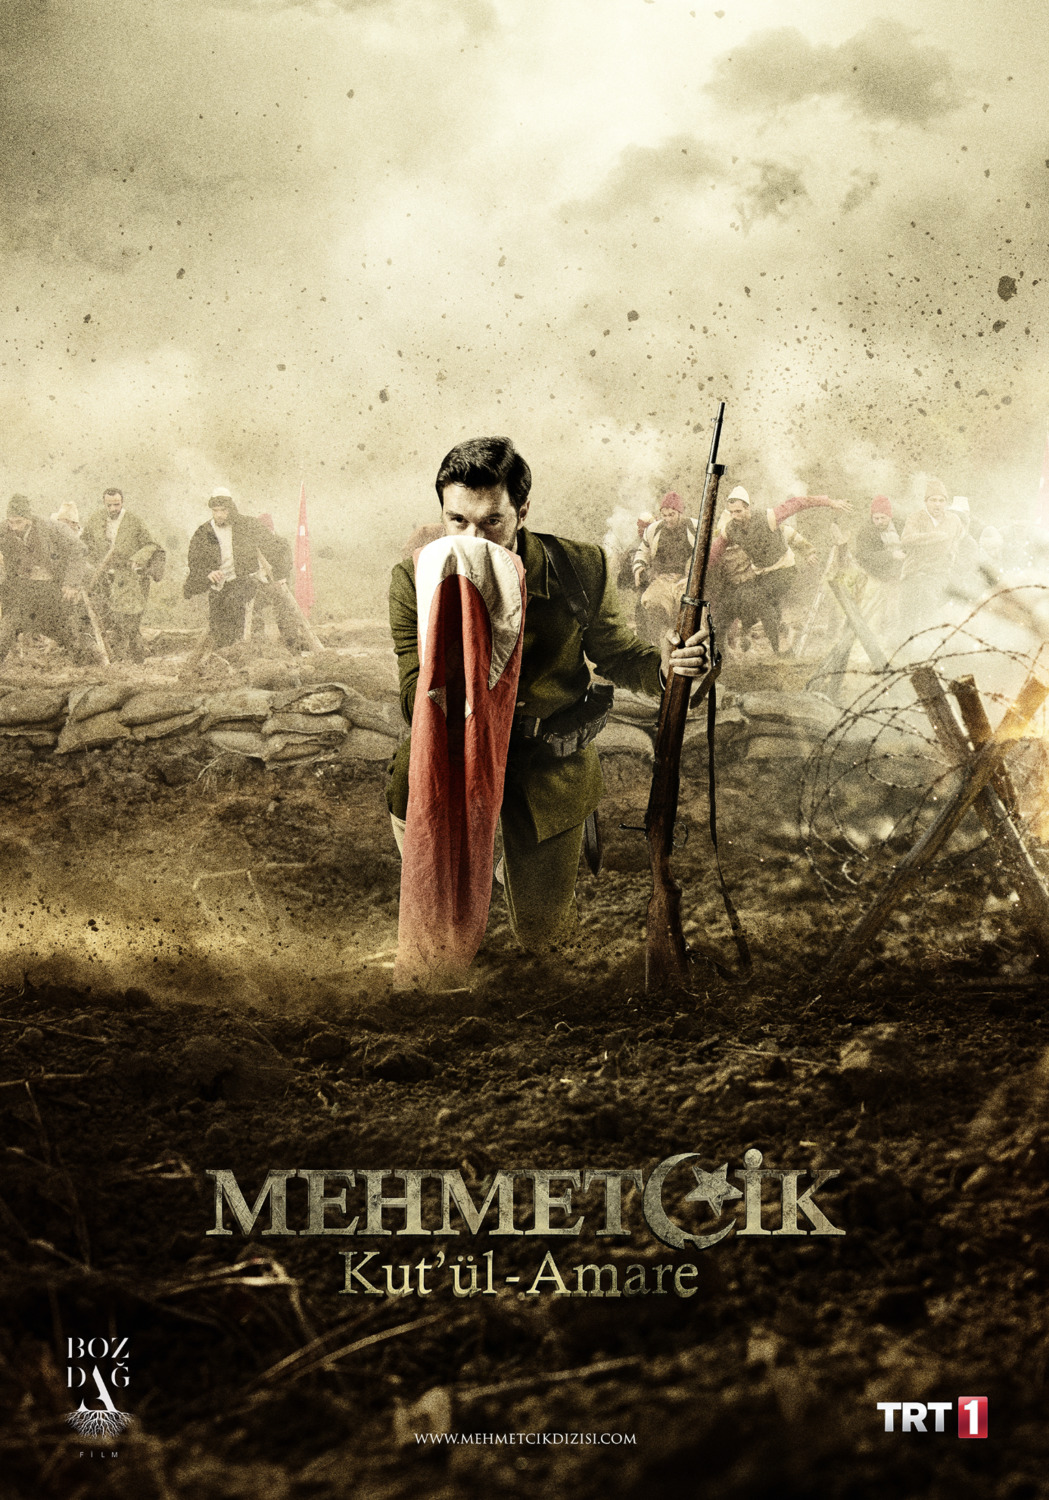 Extra Large TV Poster Image for Mehmetçik Kut'ül Amare (#37 of 41)